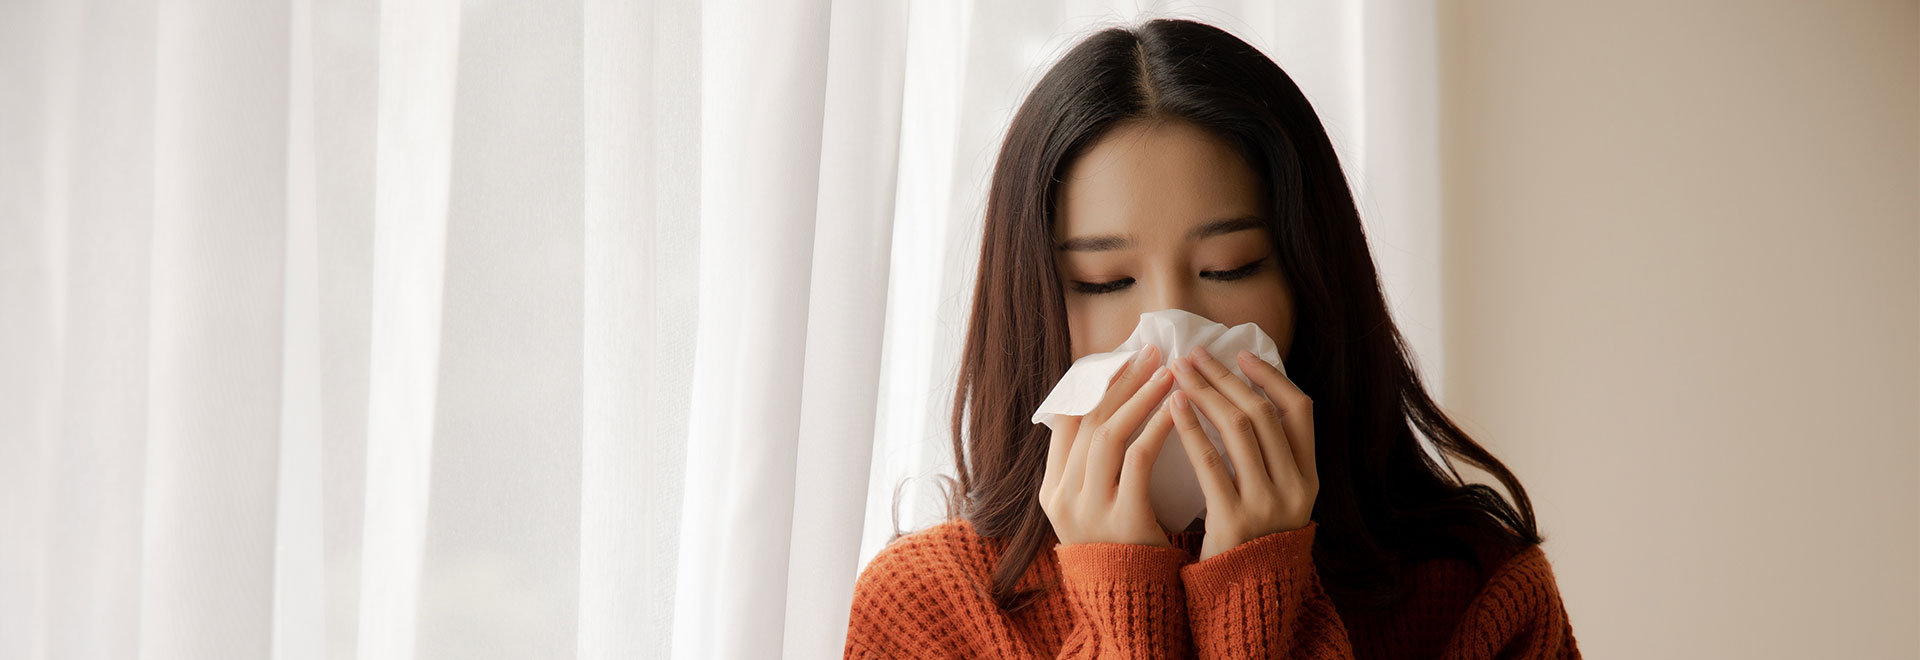 allergic-rhinitis-stuffy-nose-running-nose-sneezing